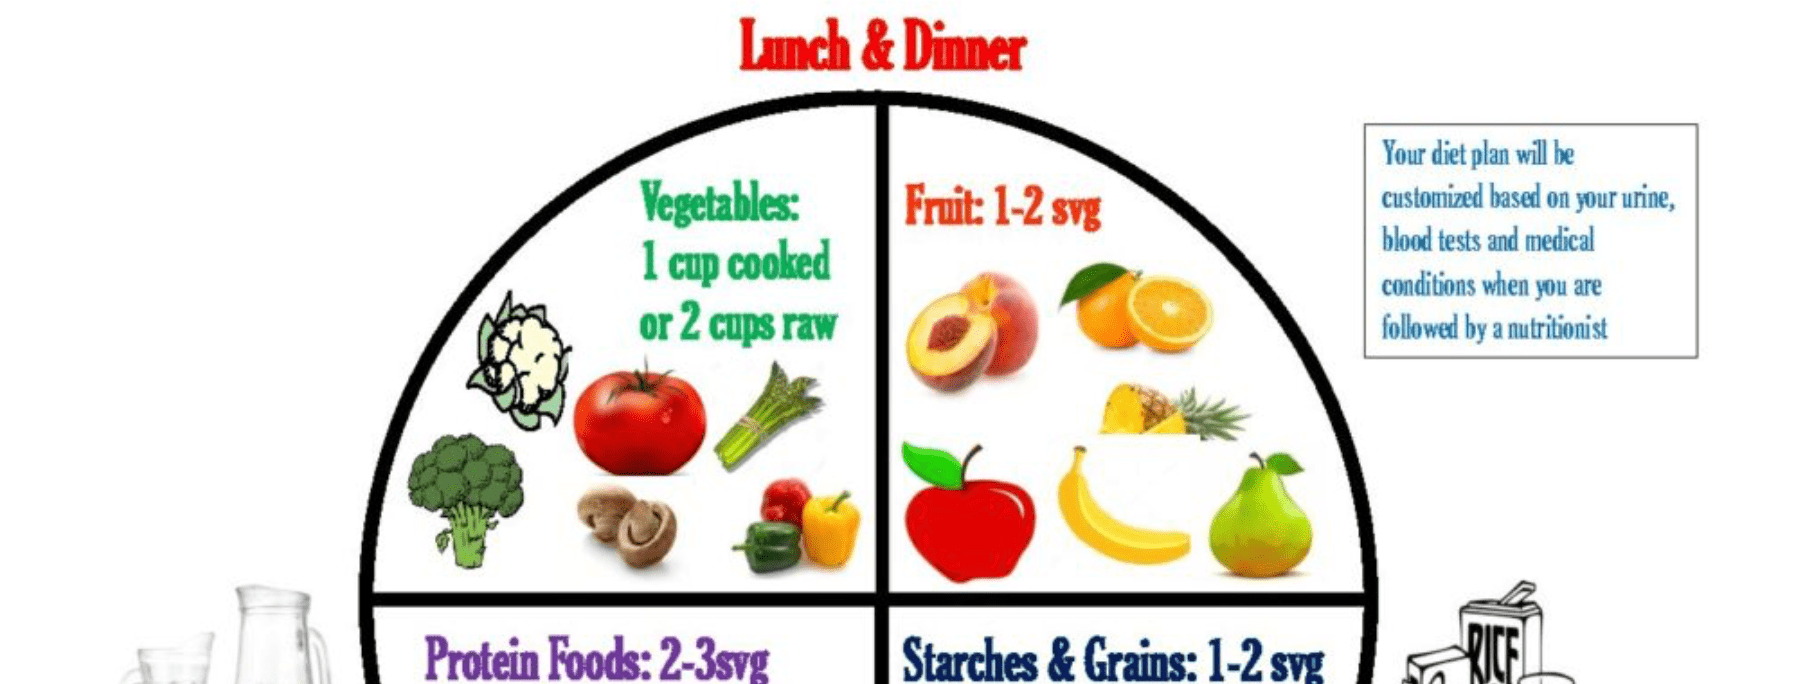 Screenshot of vegetarian diet guide